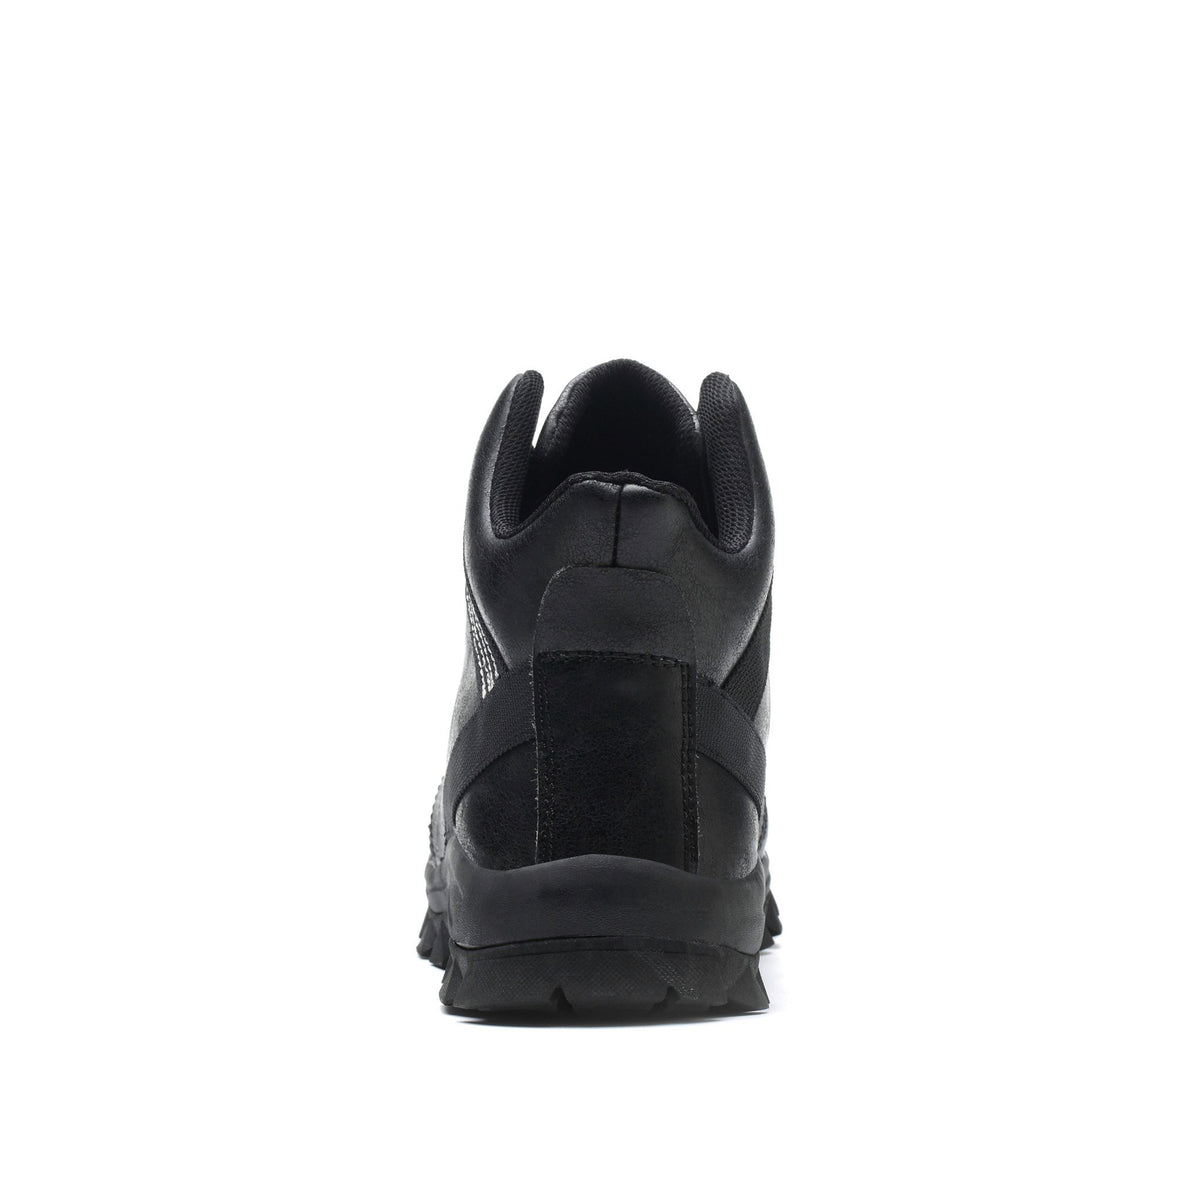 Star 101 Black - Indestructible Shoes